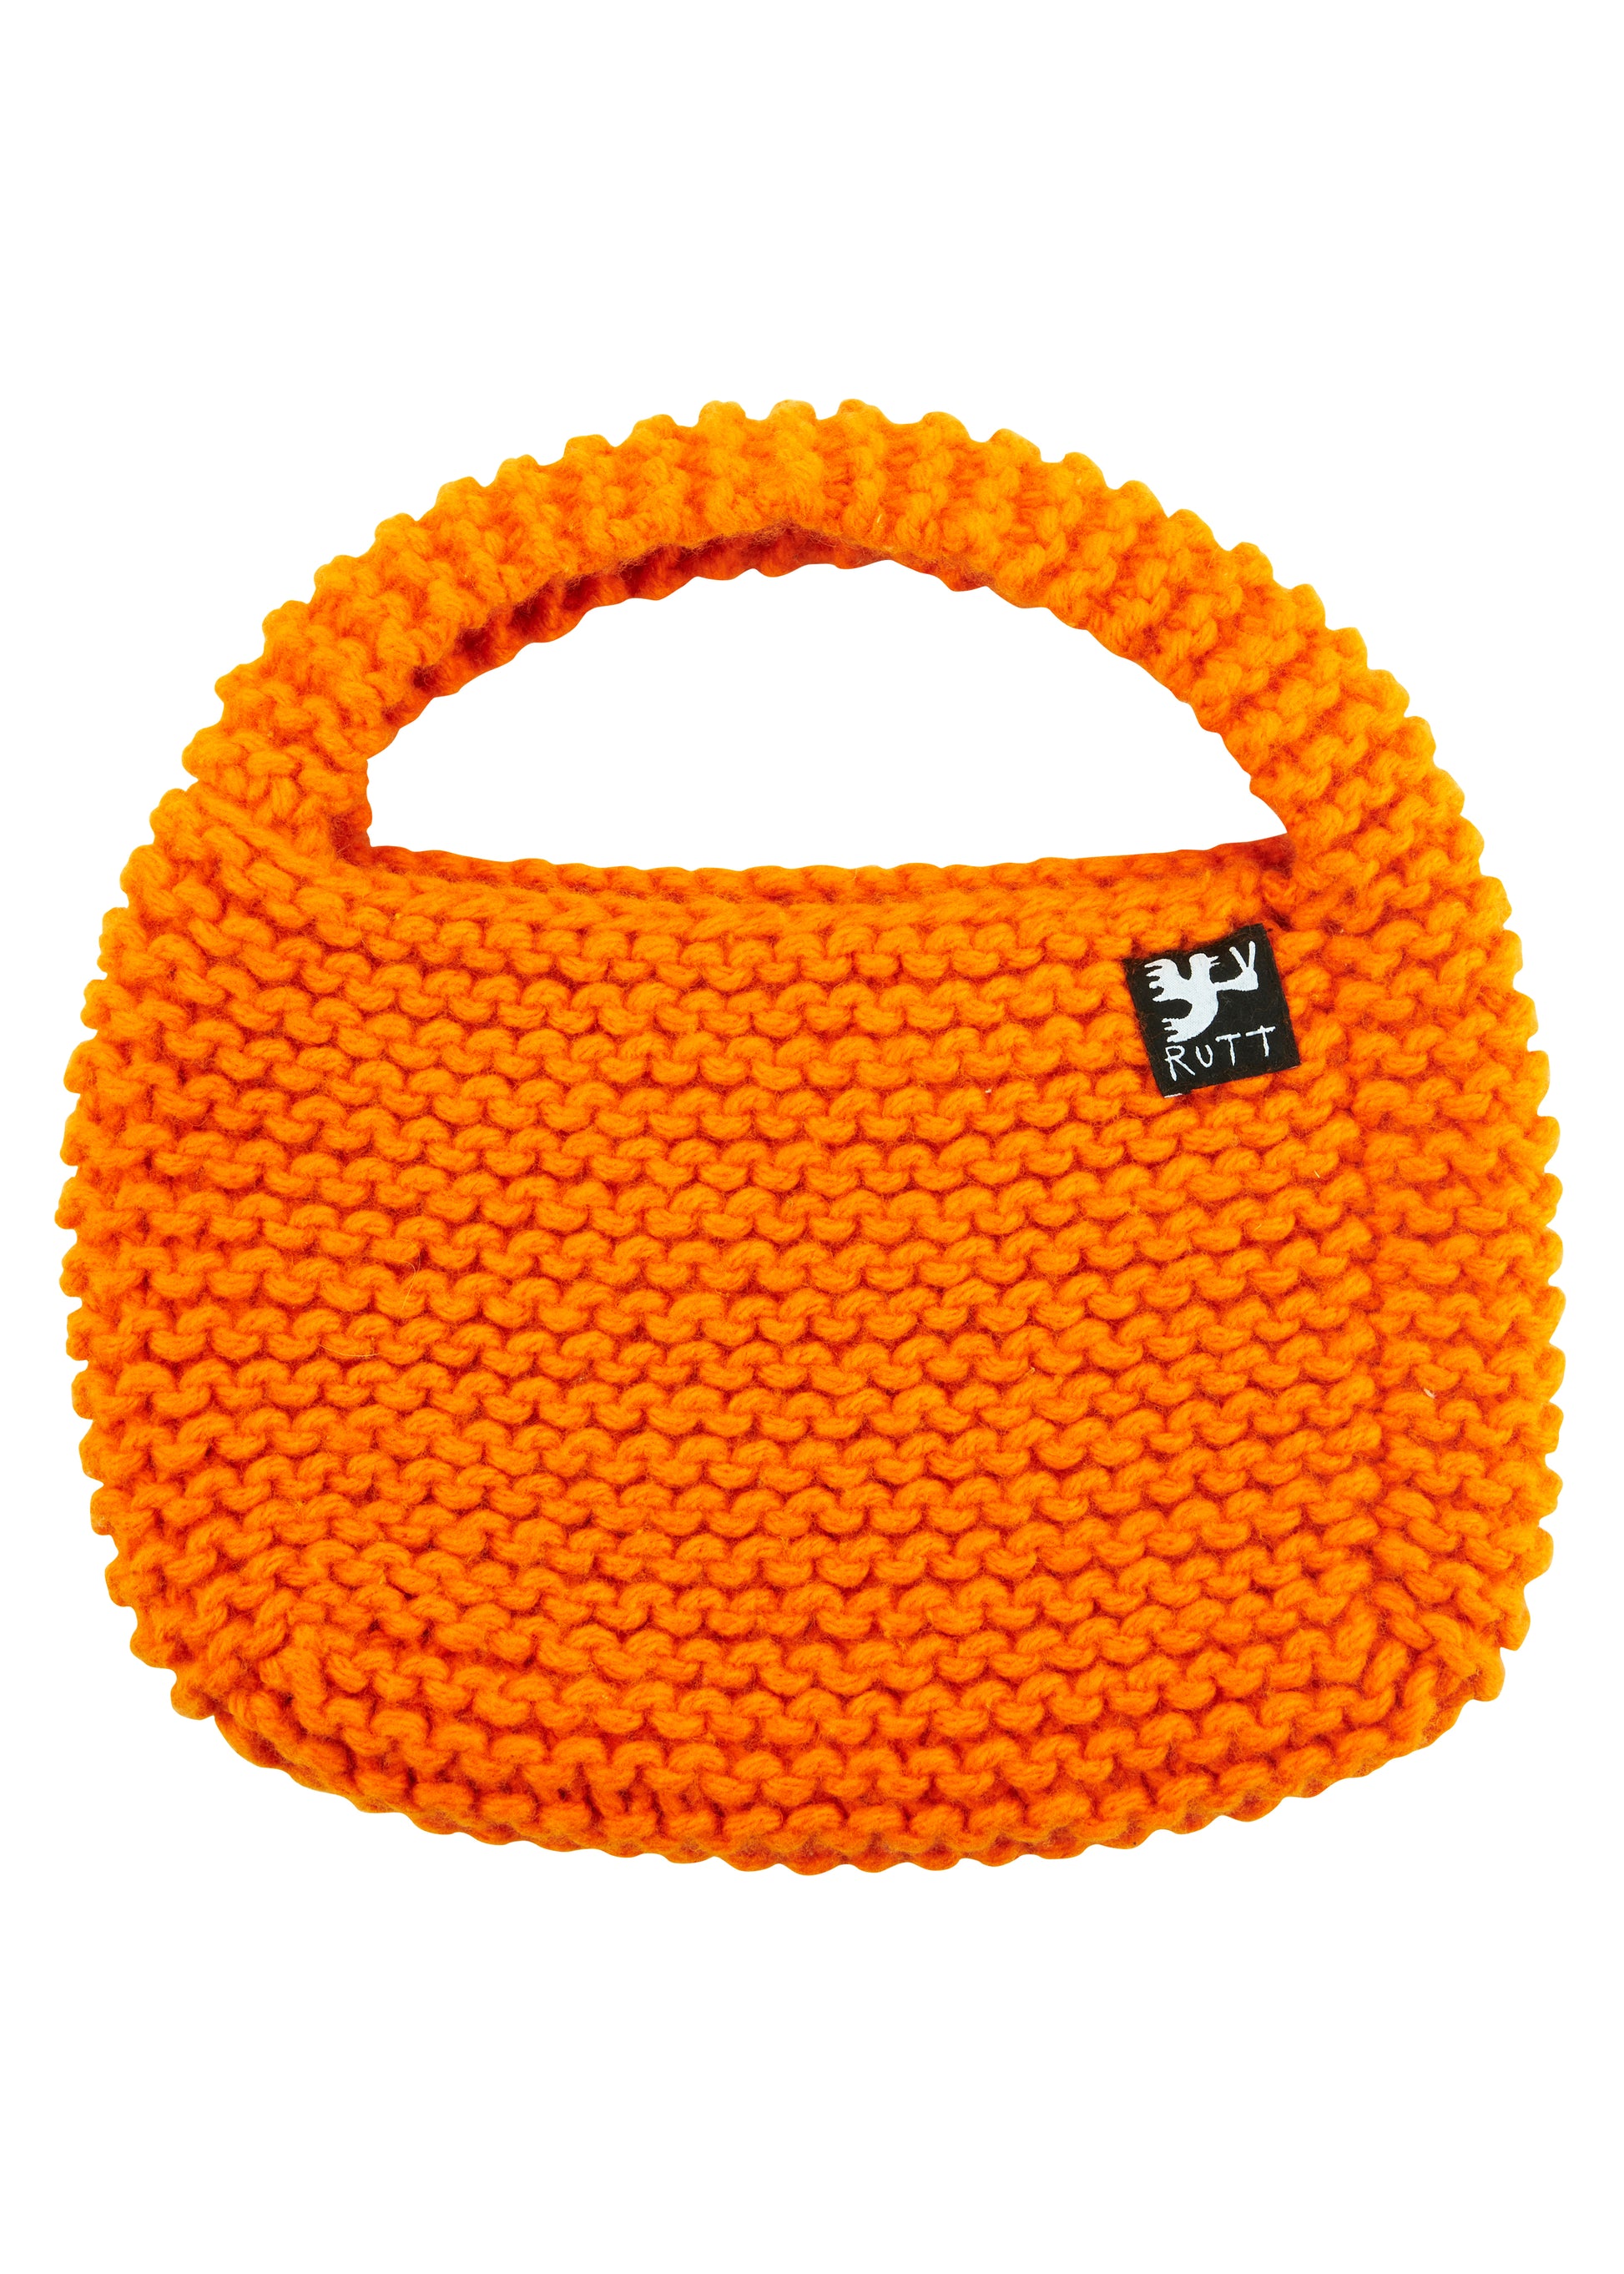 Chunky knit single strap hand bag made of soft Australian merino wool. 